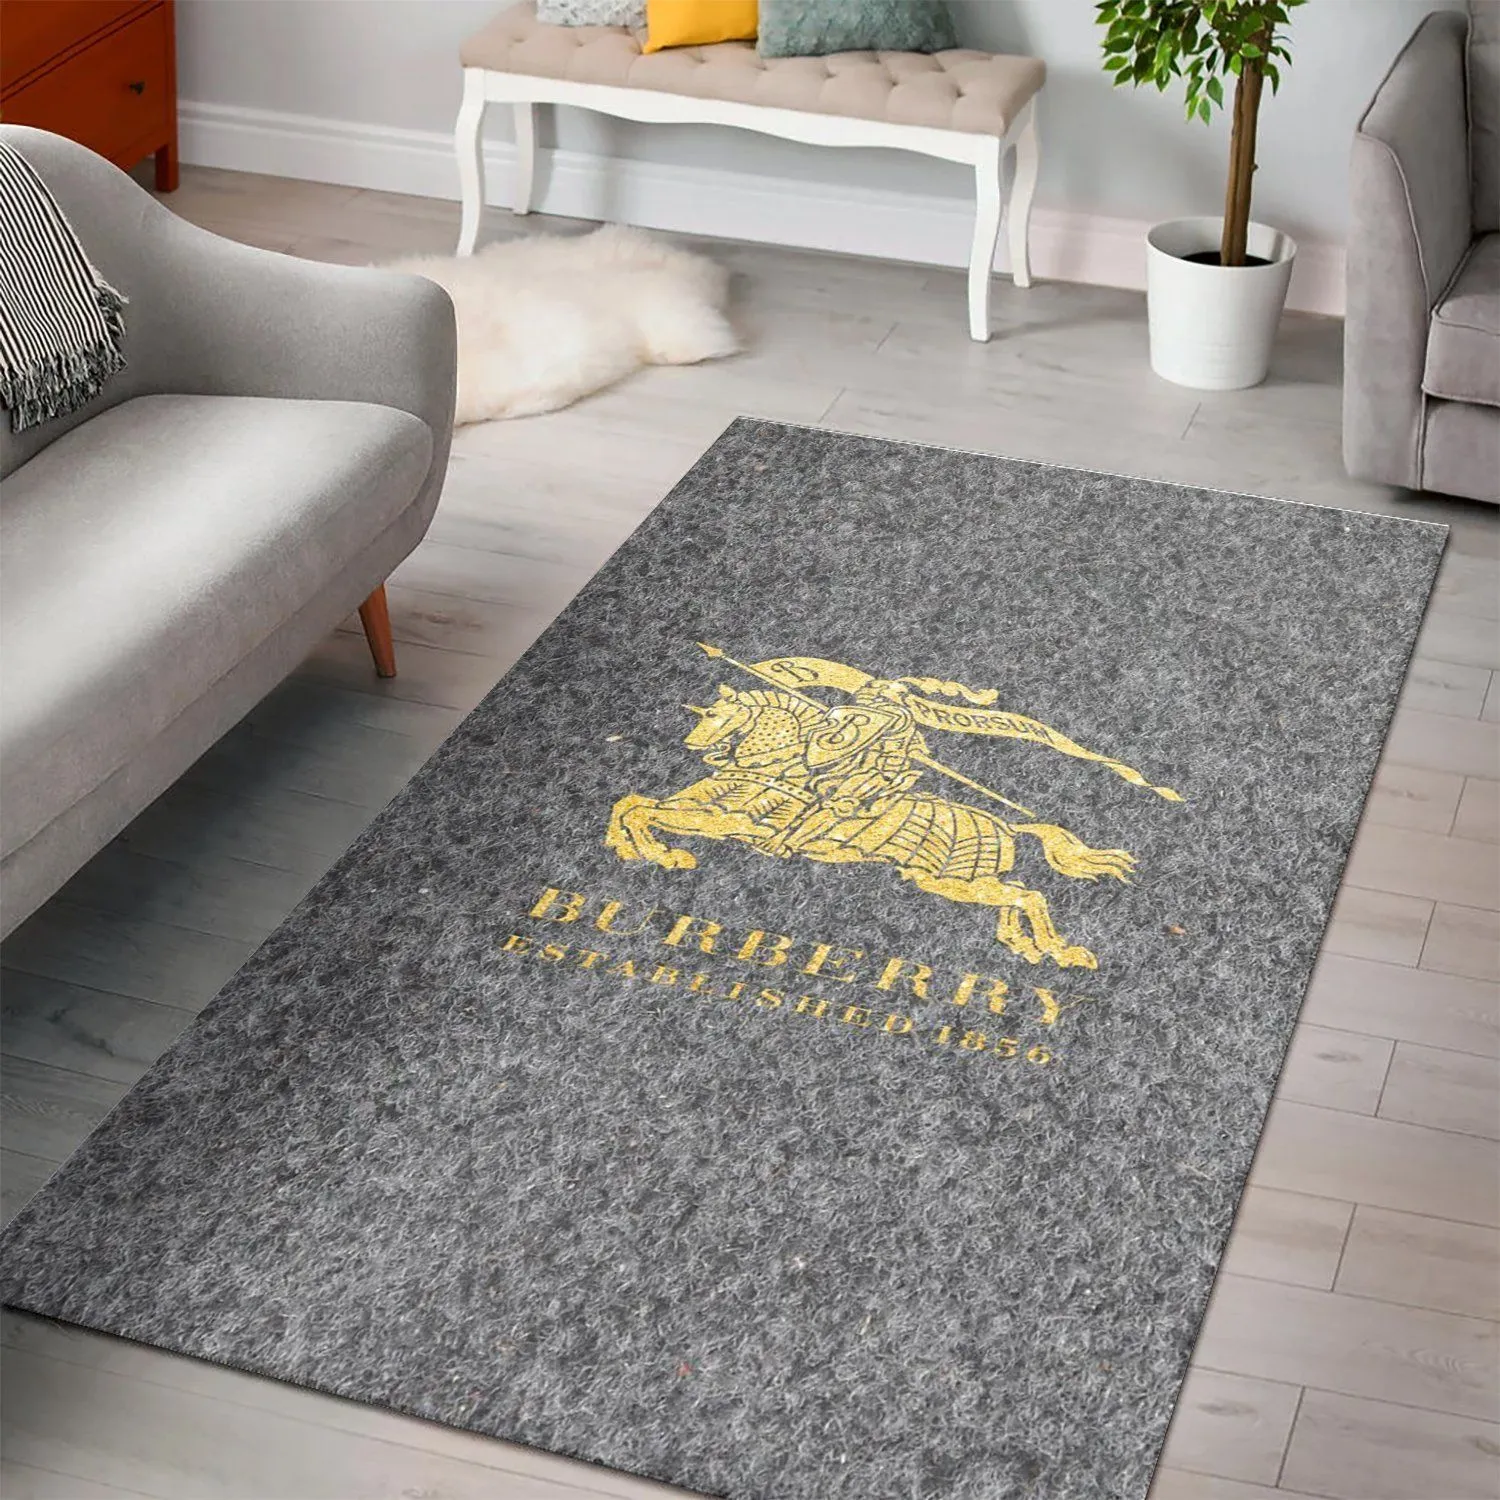 Burberry Rectangle Rug Door Mat Fashion Brand Area Carpet Home Decor Luxury